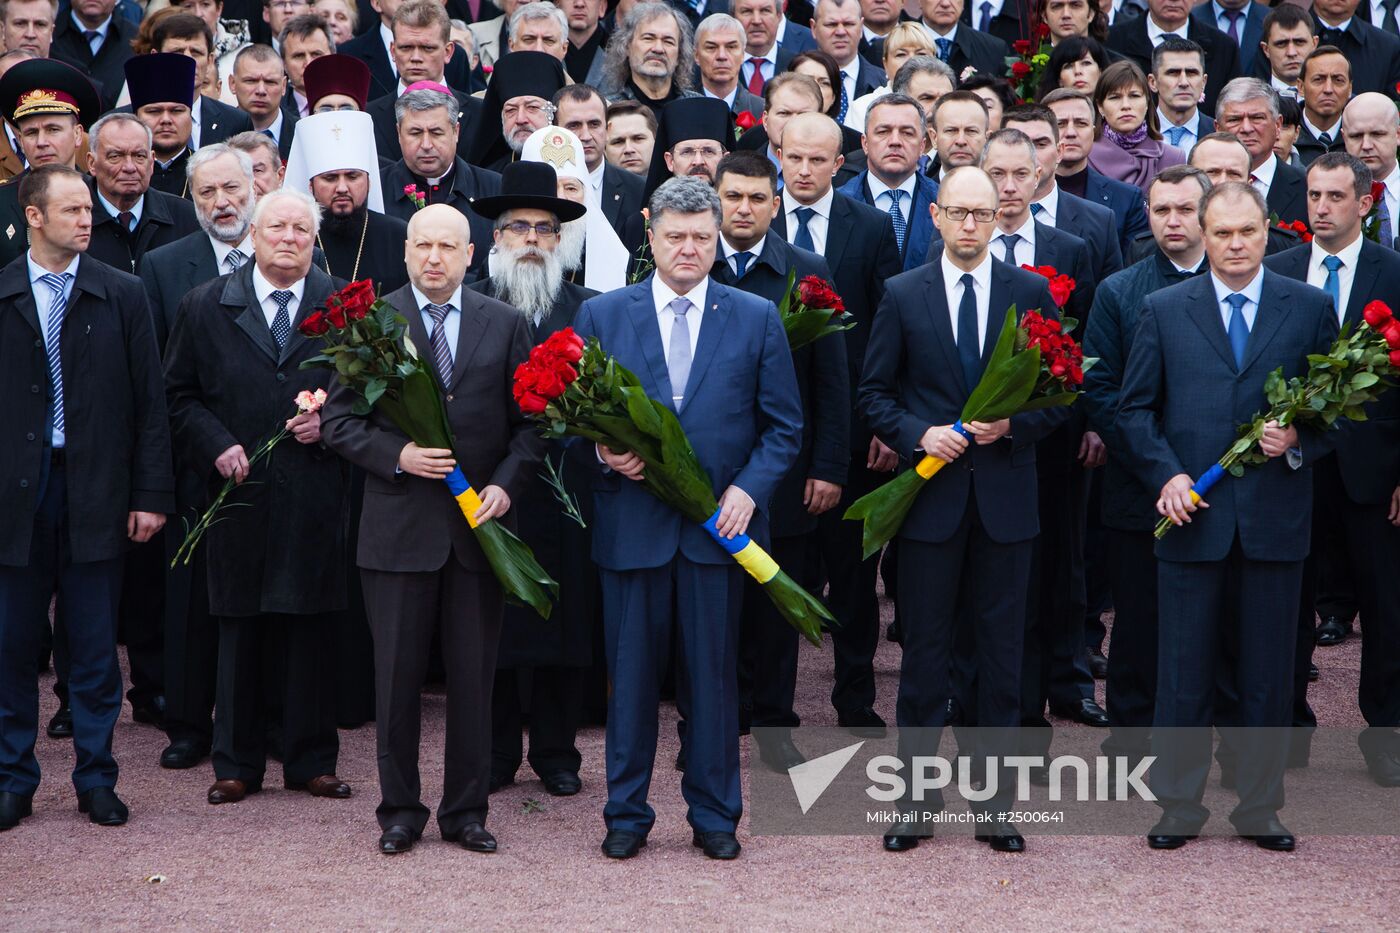 Ukrainian President Petro Poroshenko honors the memory of Babi Yar victims